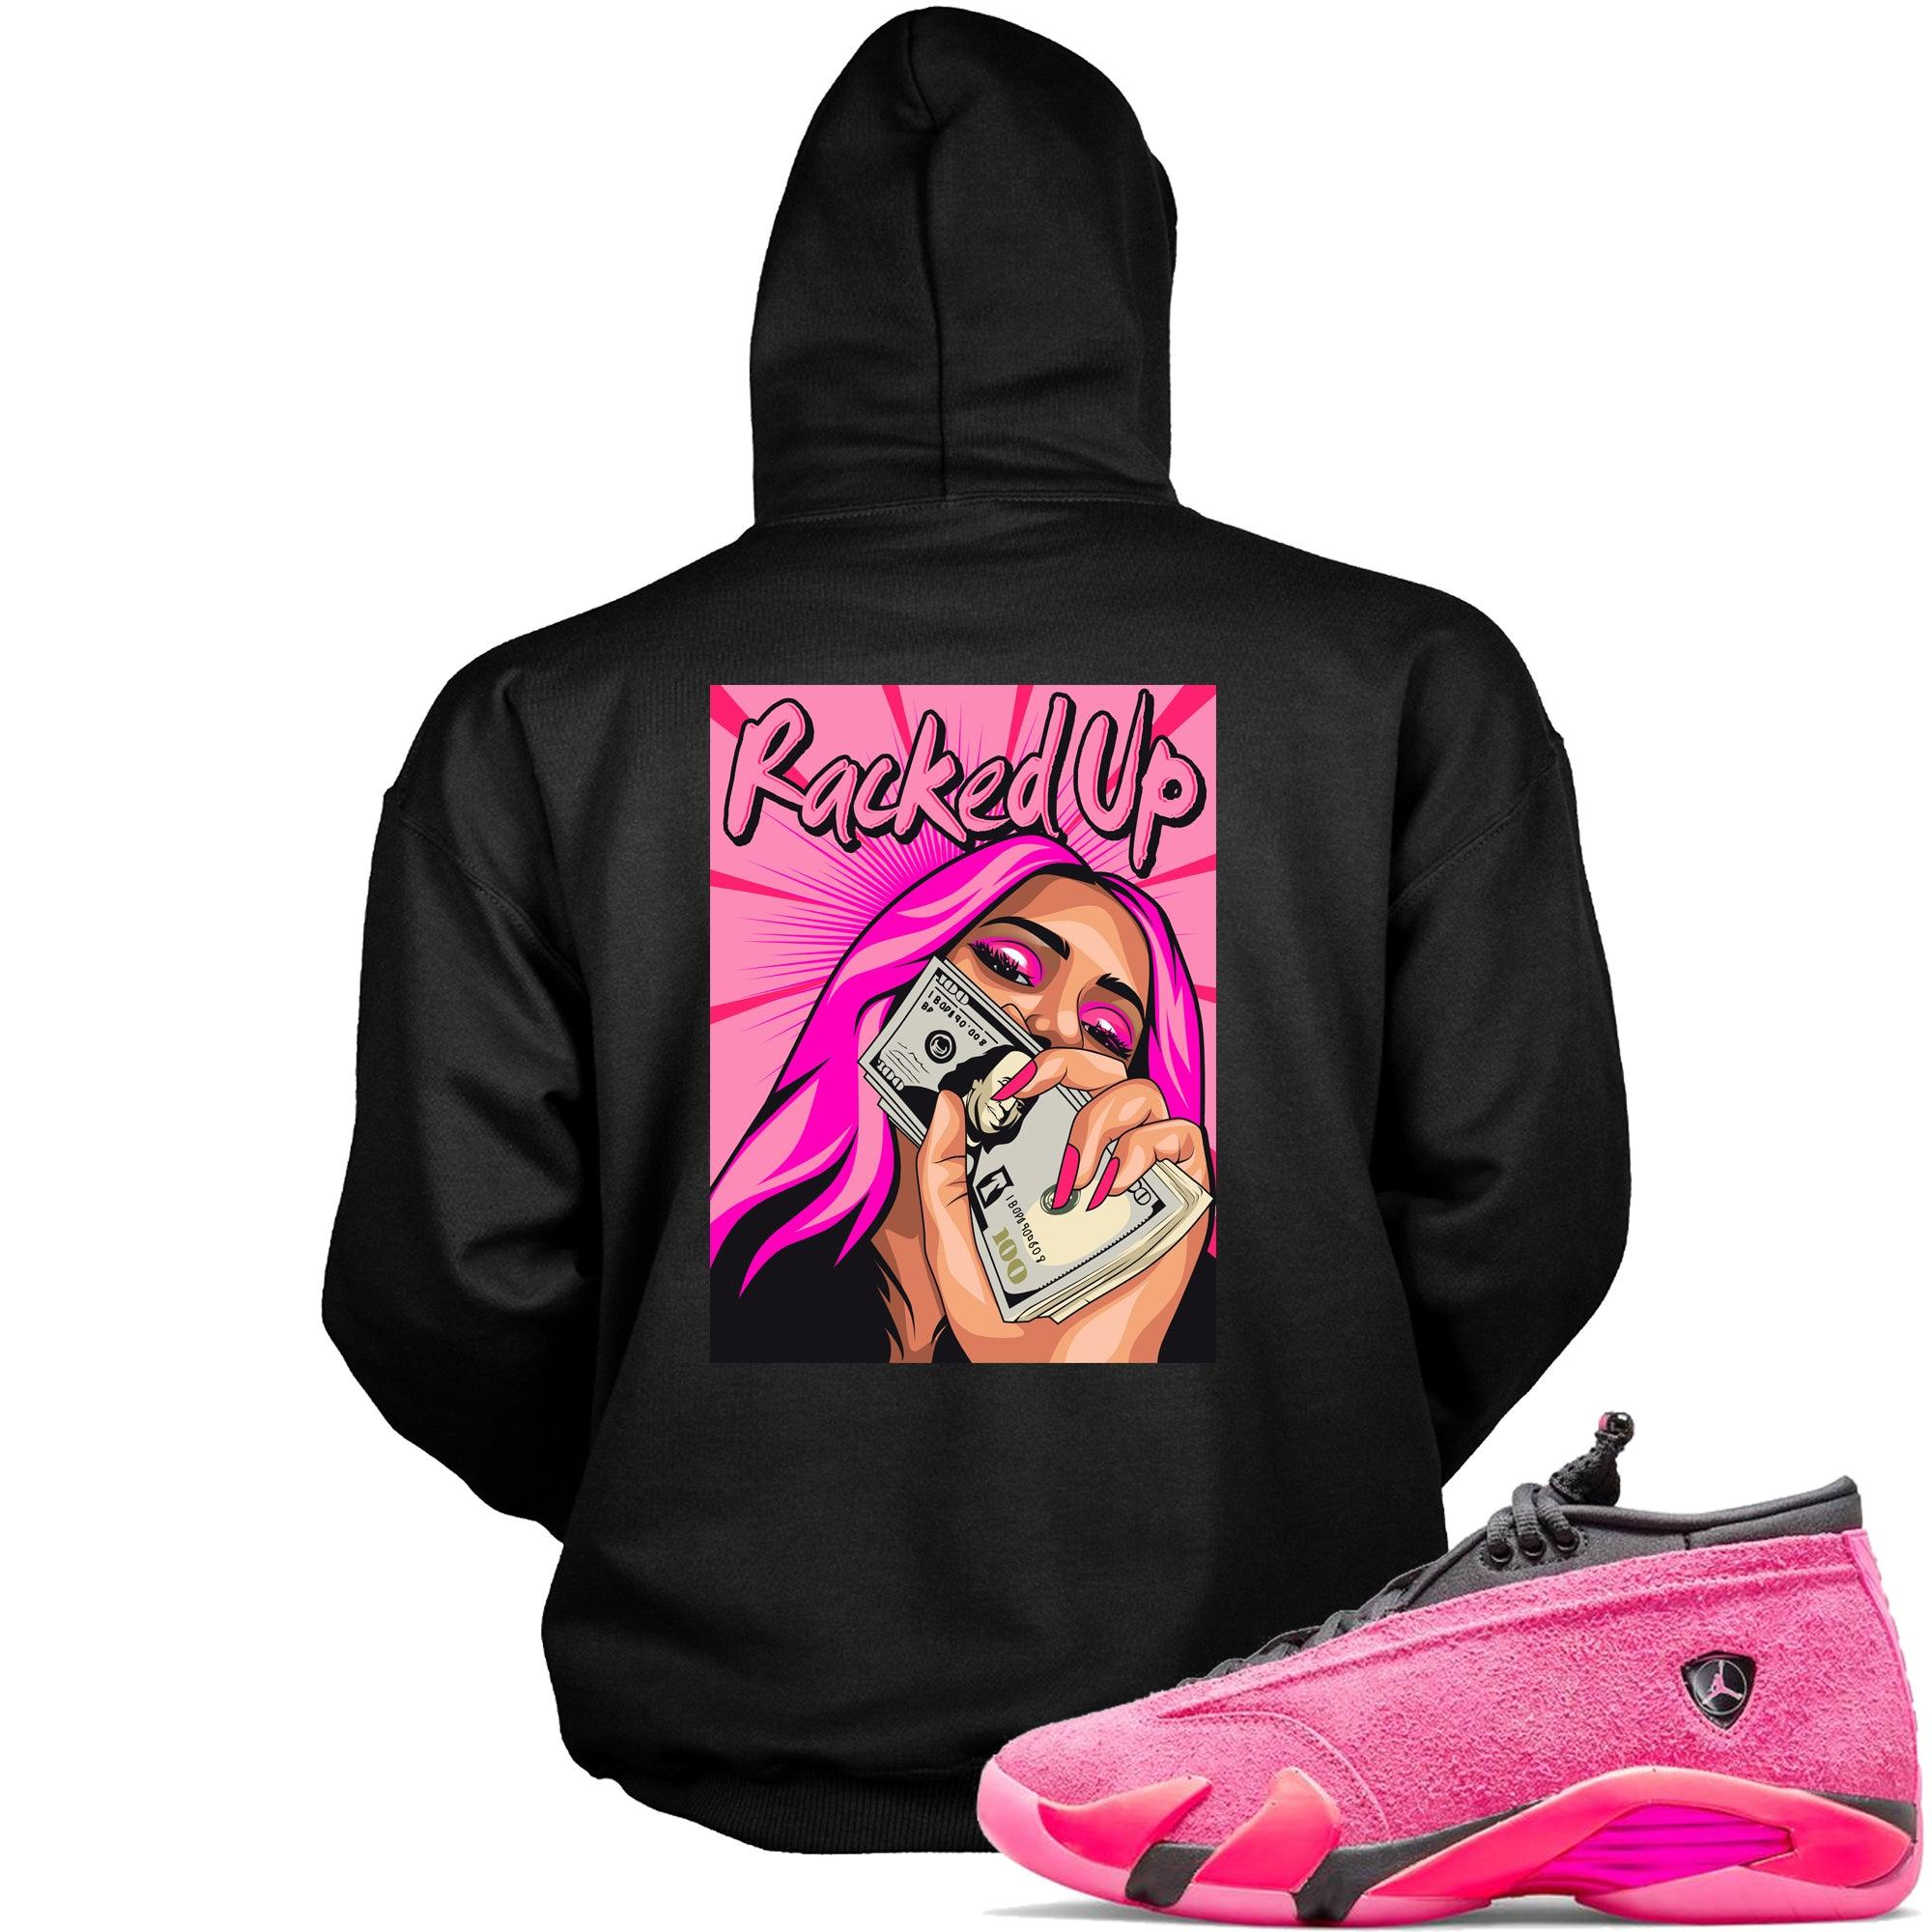 Black Racked Up Hoodie Jordan 14s Low Shocking Pink photo